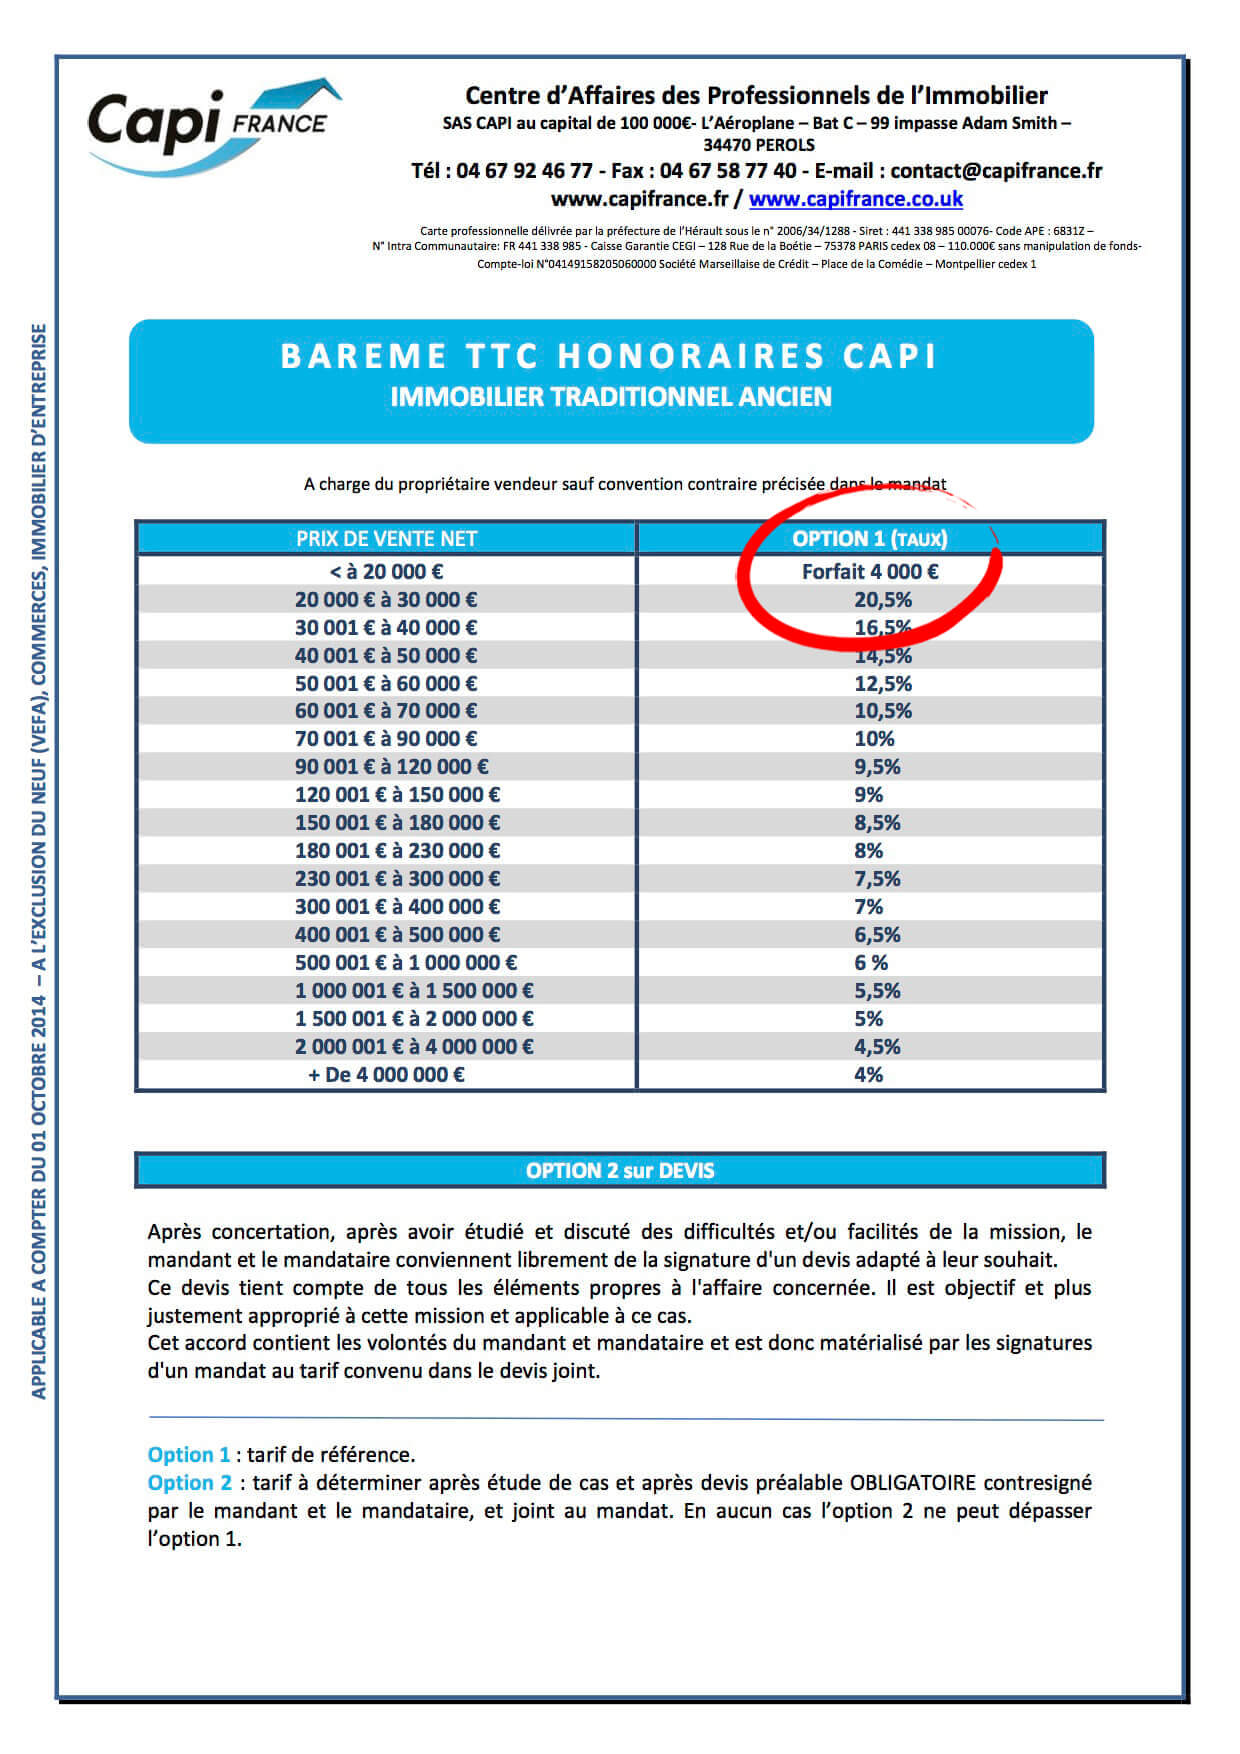 CAPI France - Barème honoraires 20,5 %